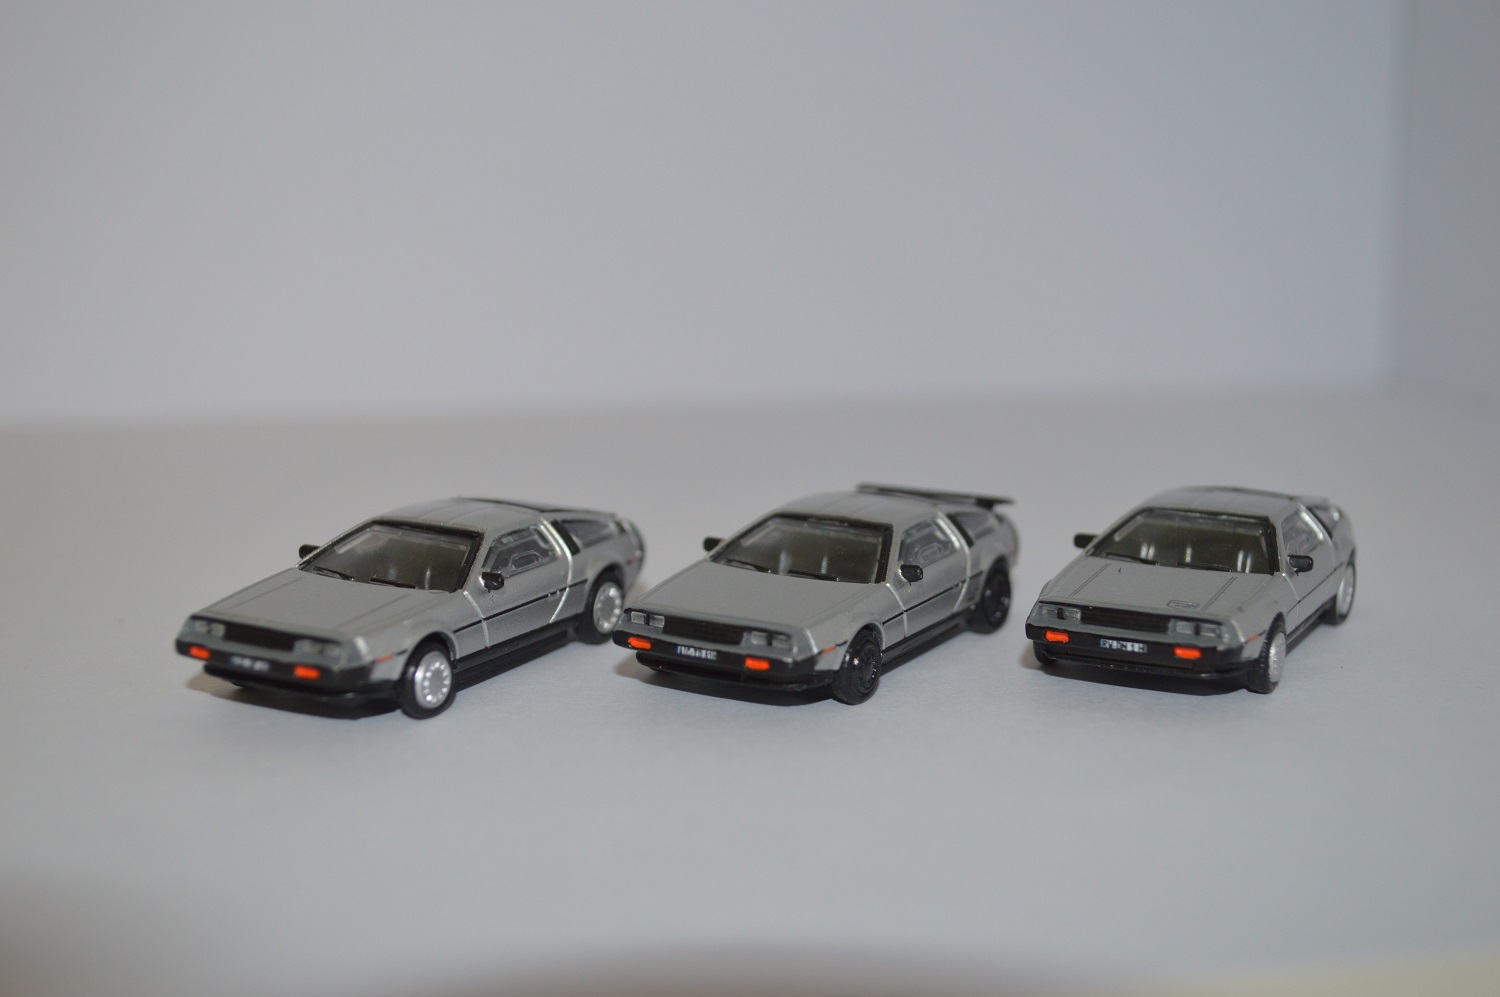 Von links nach rechts: NA 88001.1 Wolfgang's Car, NA 88007 Turbo, NA 88022 Elvis'Car